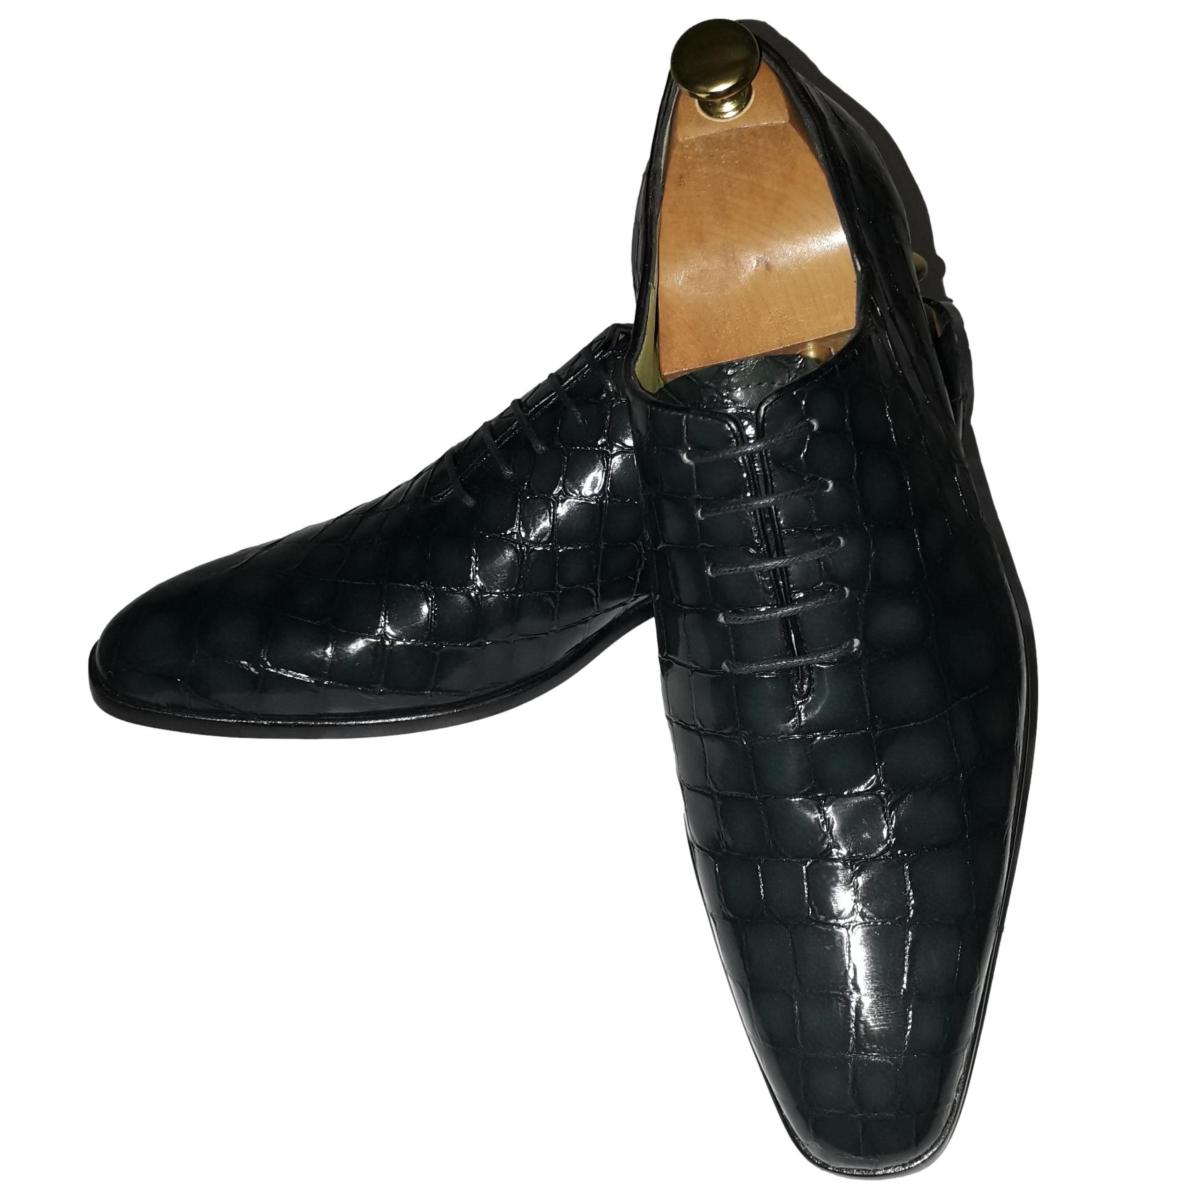 Chaussures costume vernies homme Chaussures cuir lacets vernis noir